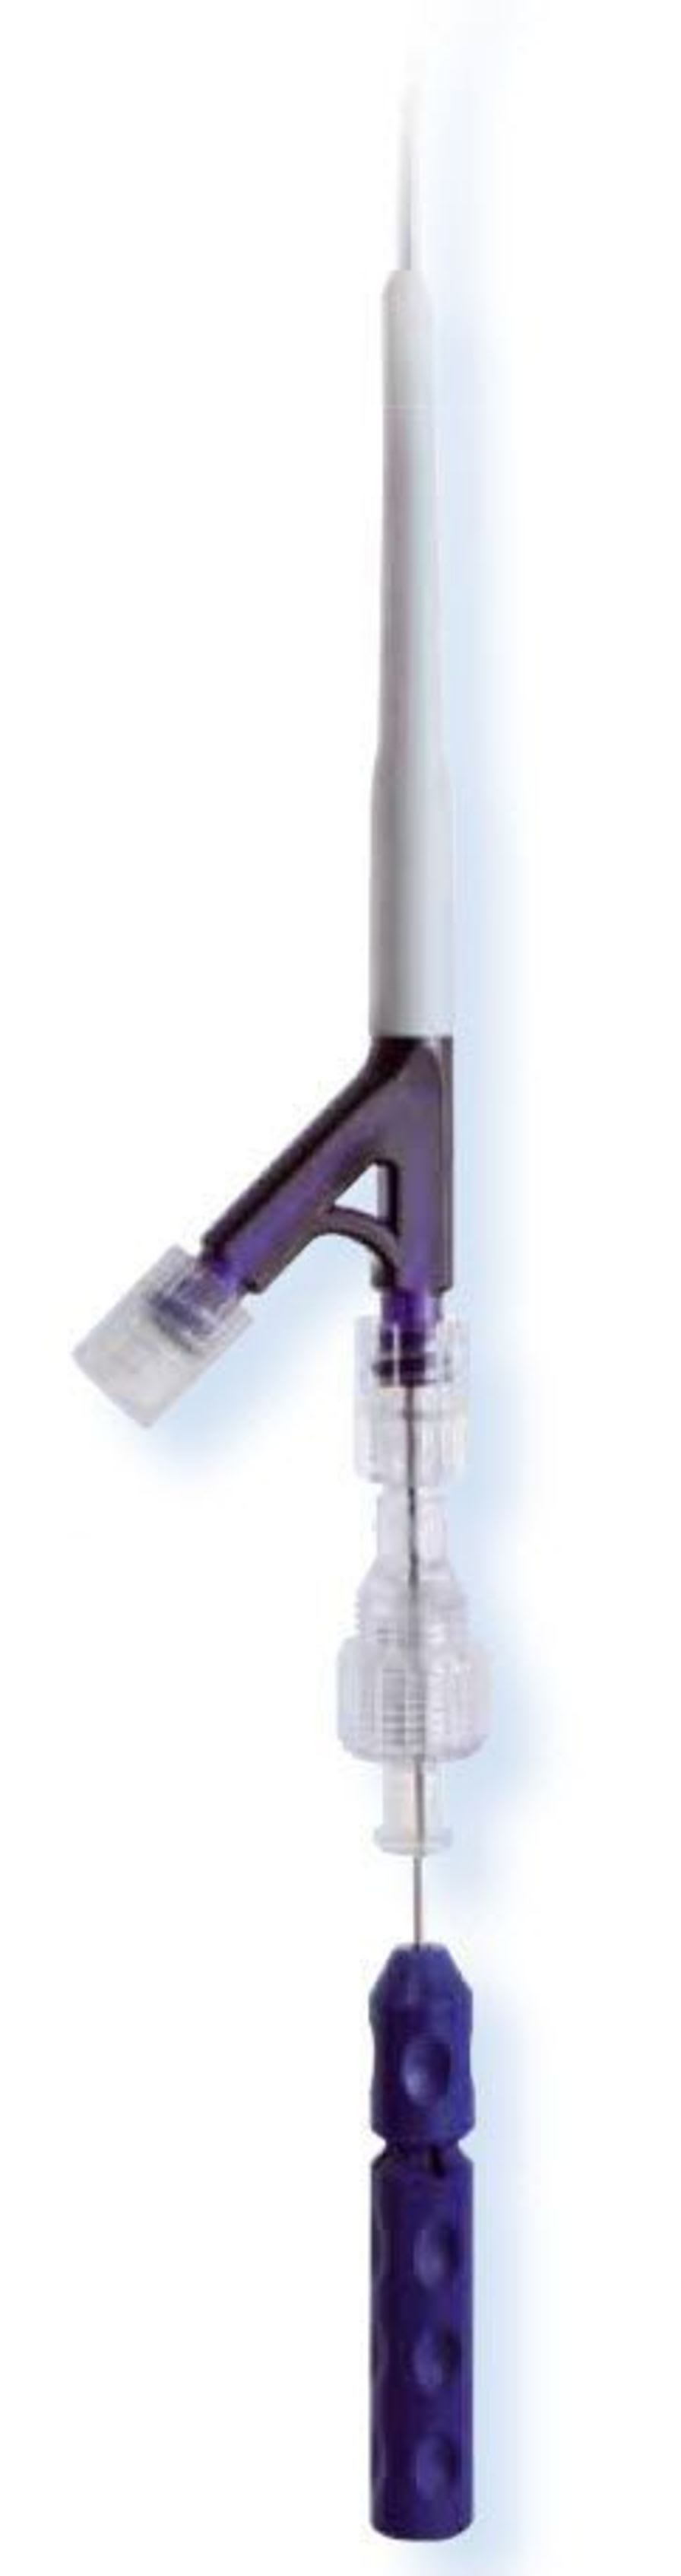 Extractor catheter / biliary 2203xx series Asept Inmed